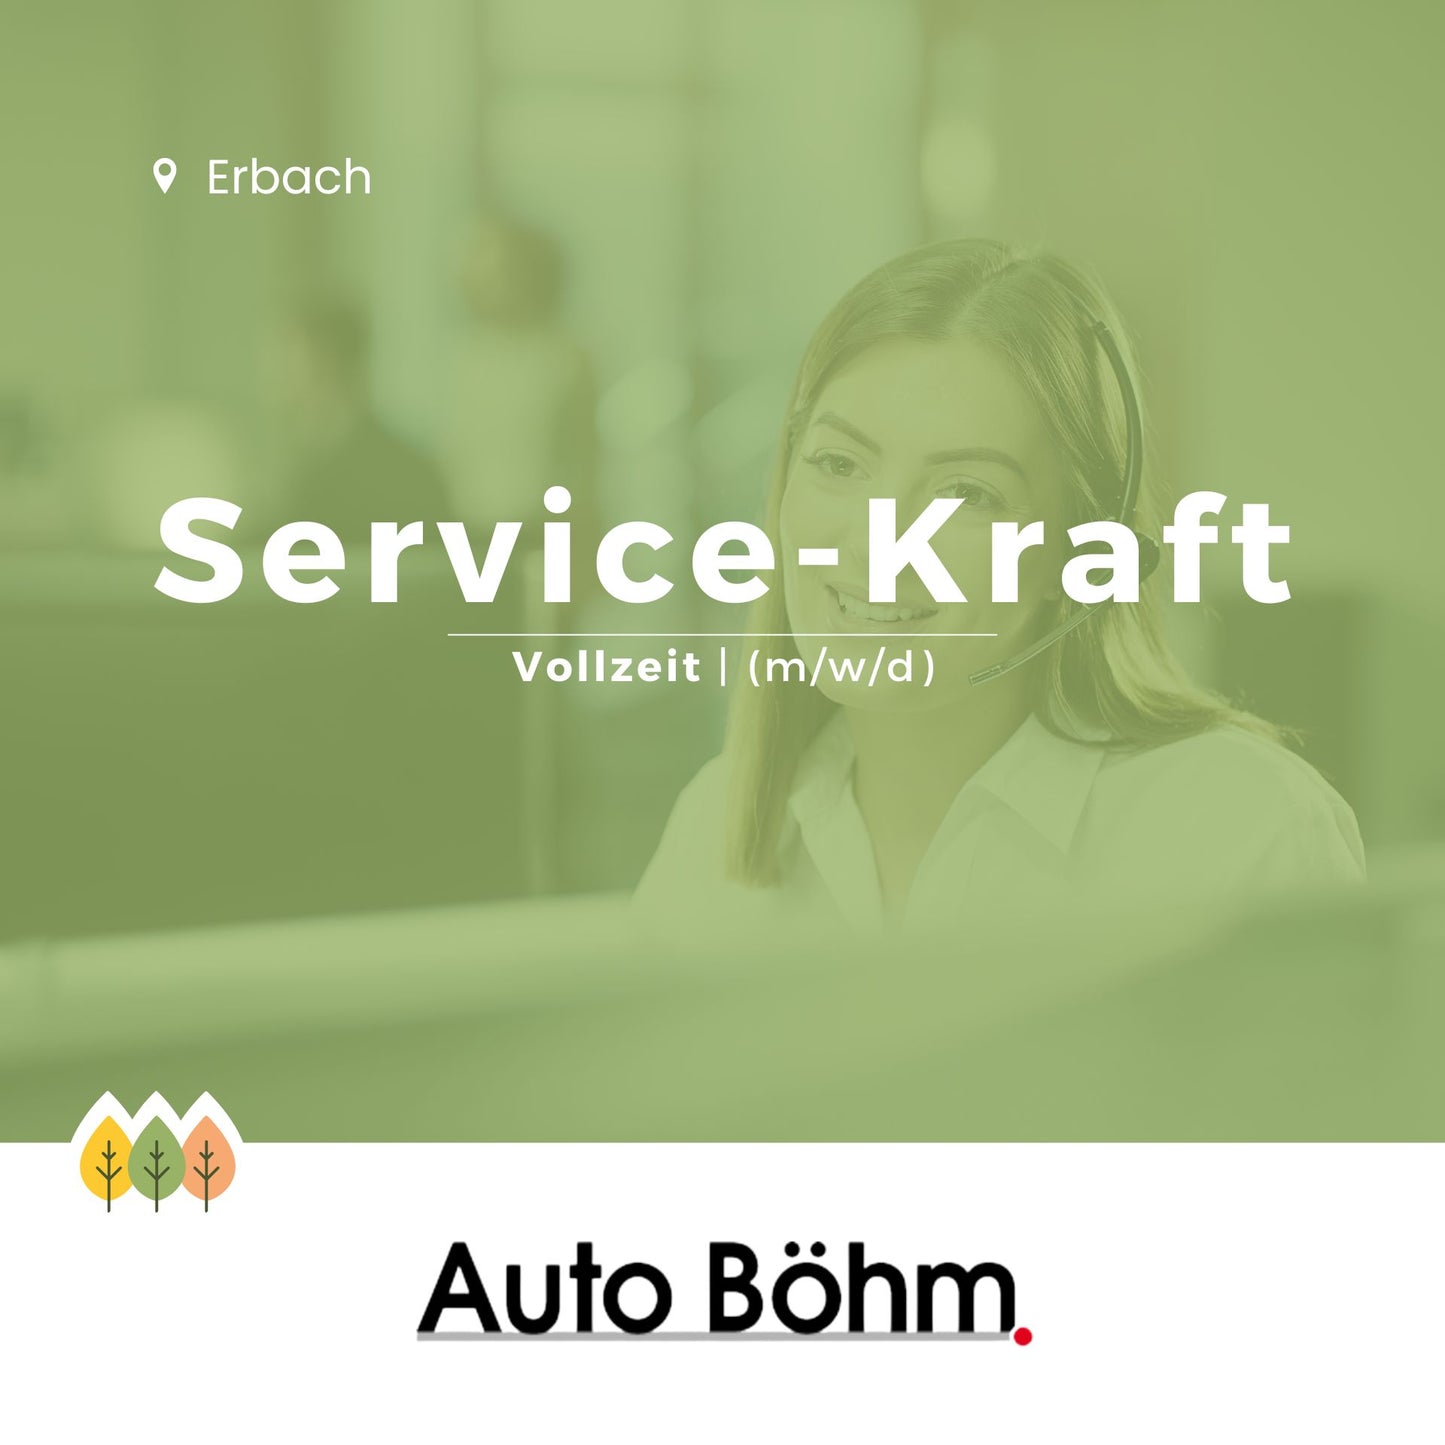 Service-Kraft